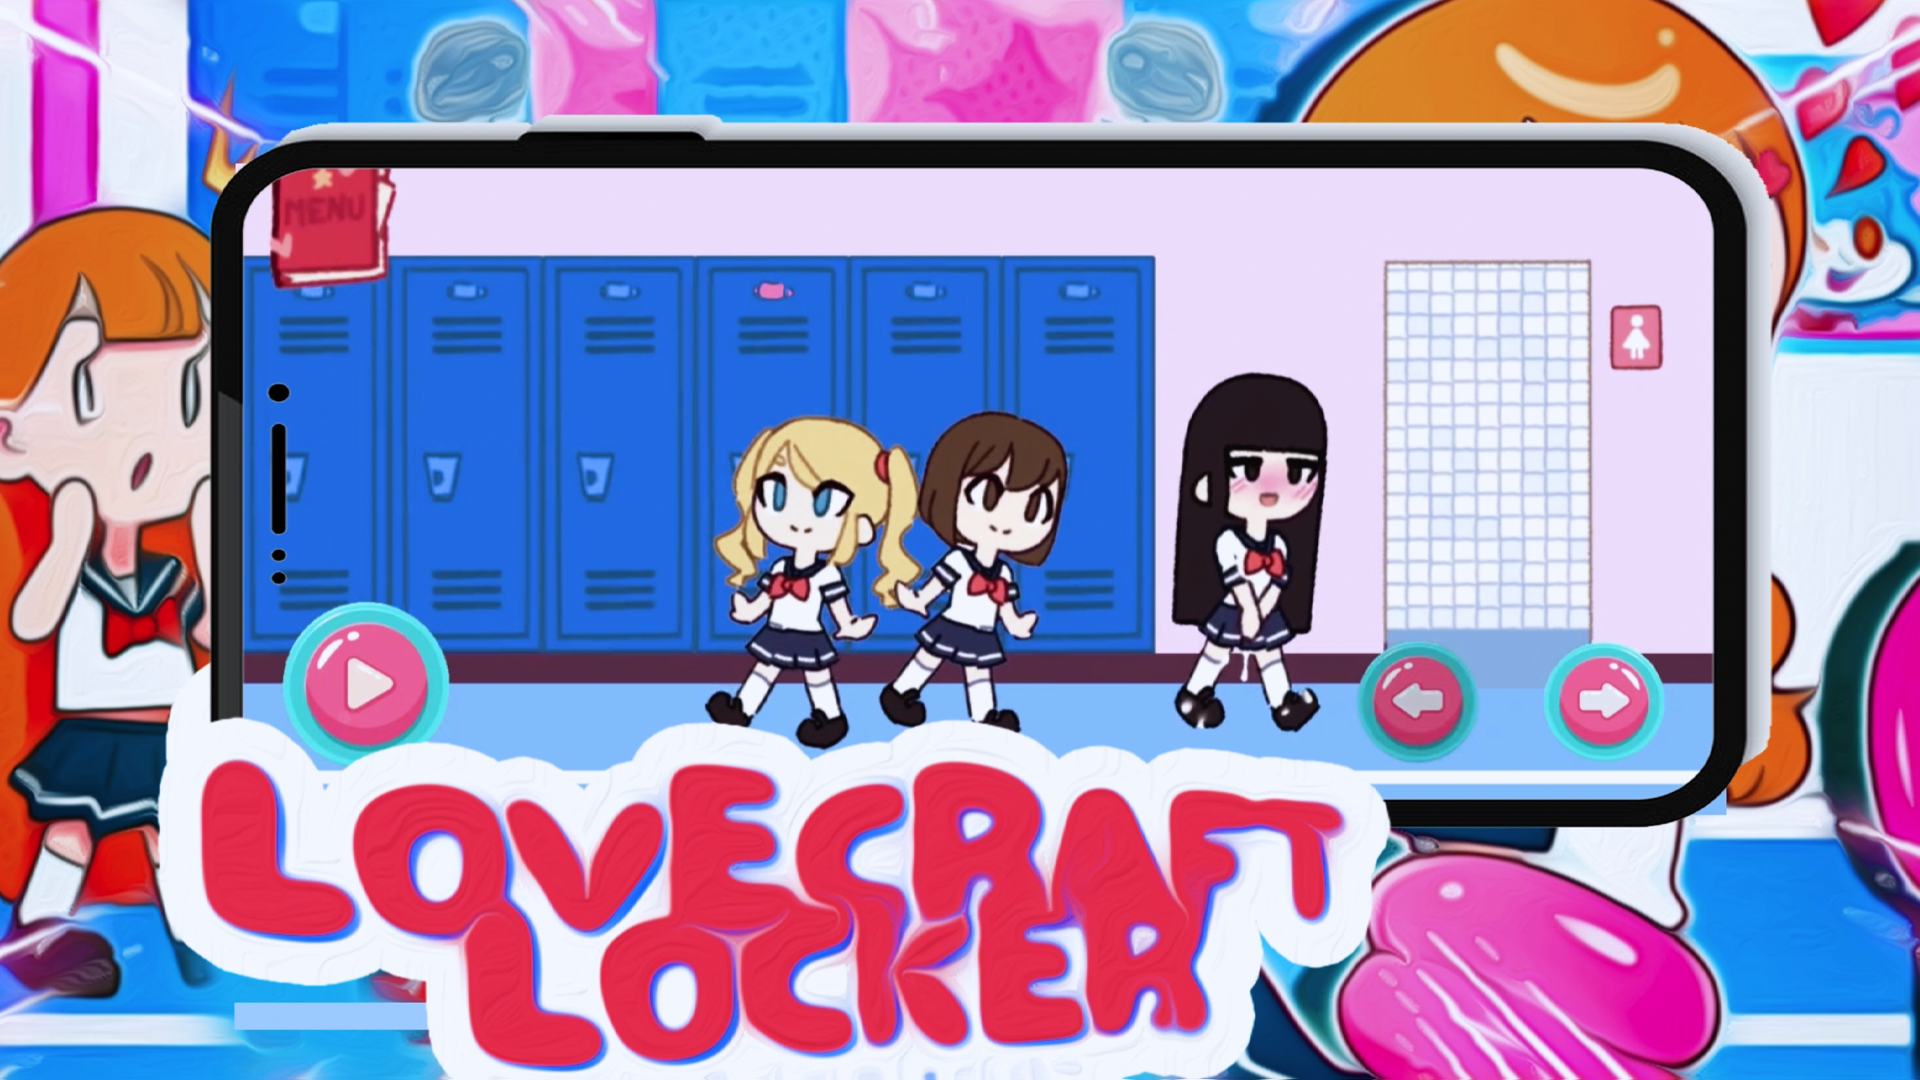 Screenshot 1 of Game Loker LoveCraft 